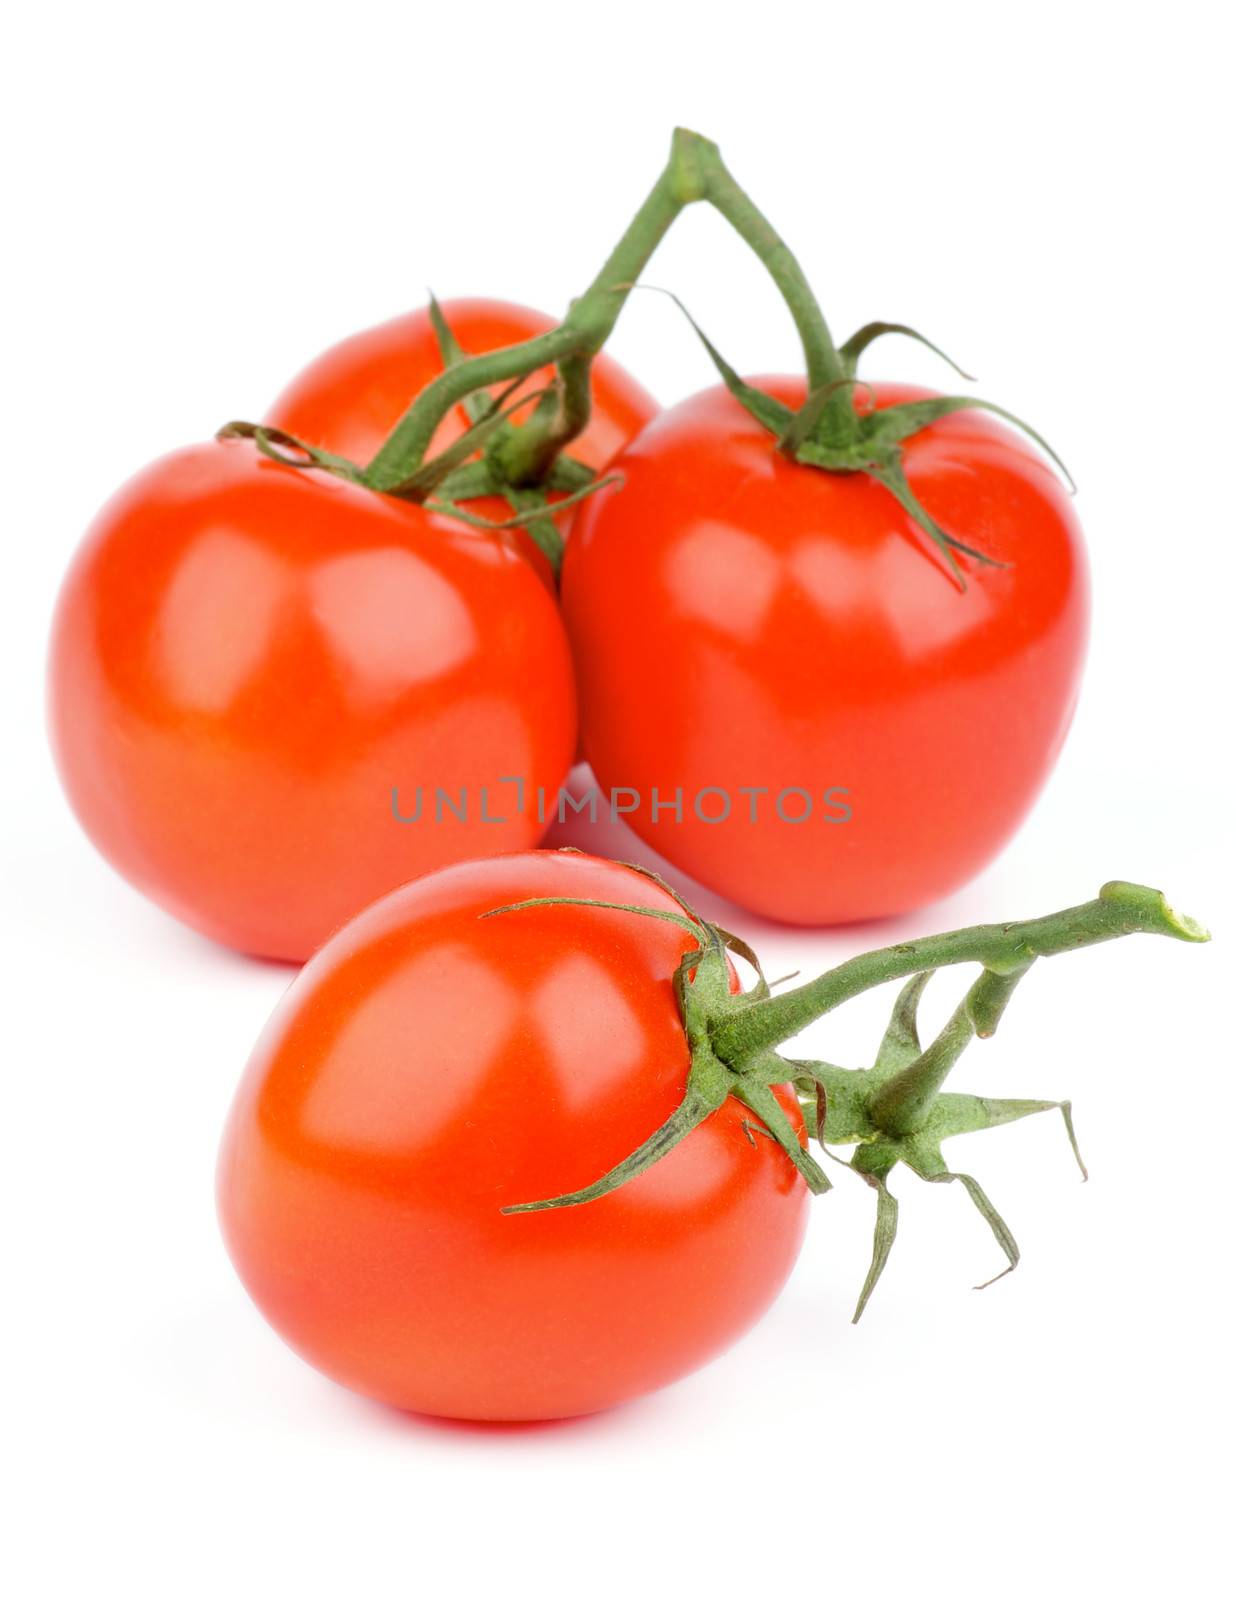 Ripe Tomatoes by zhekos